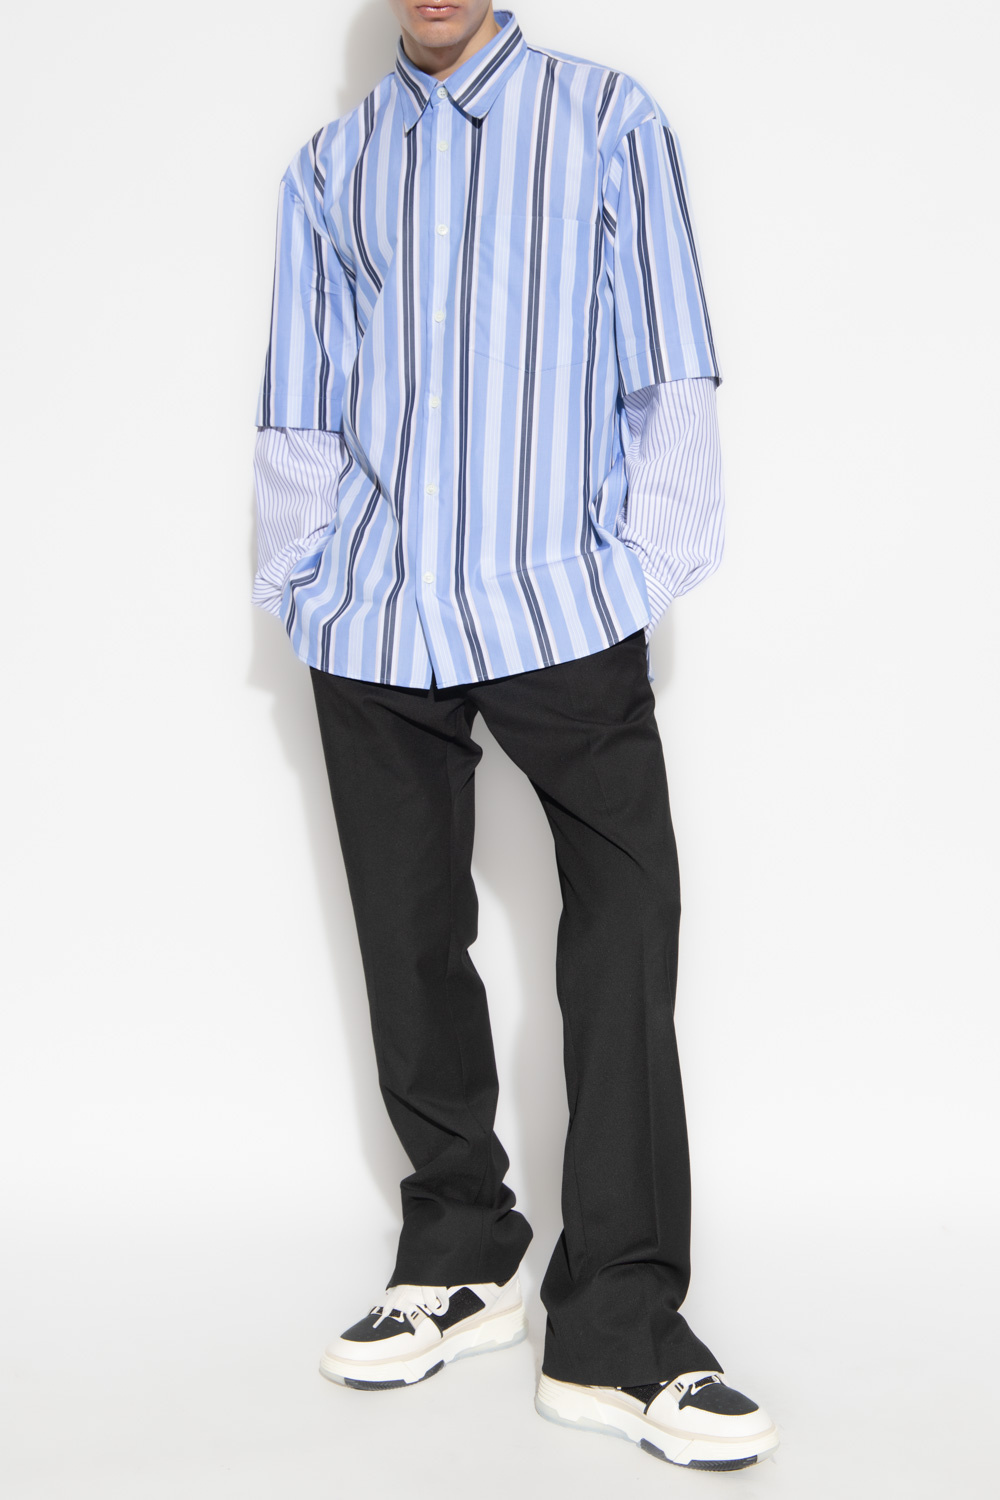 Dries Van Noten Striped shirt | Men's Clothing | Vitkac